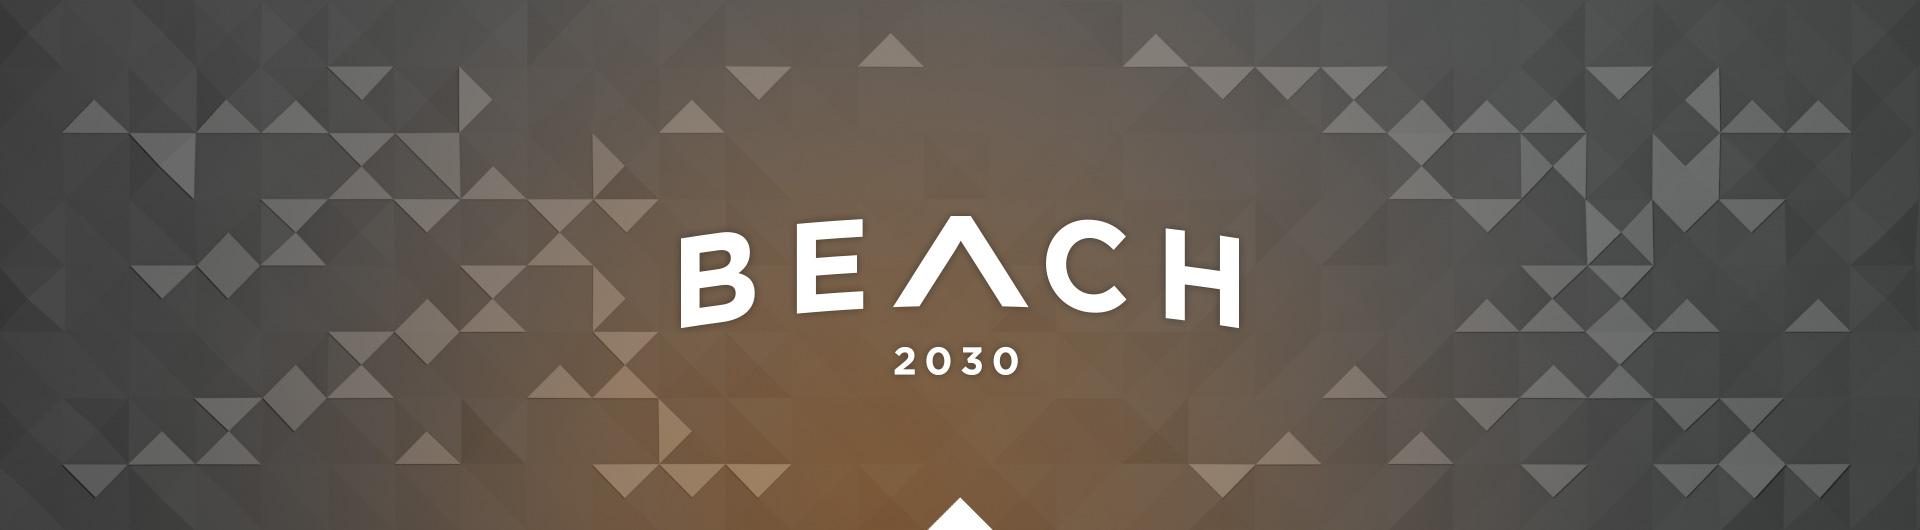 Beach 2030 campus Sculpture